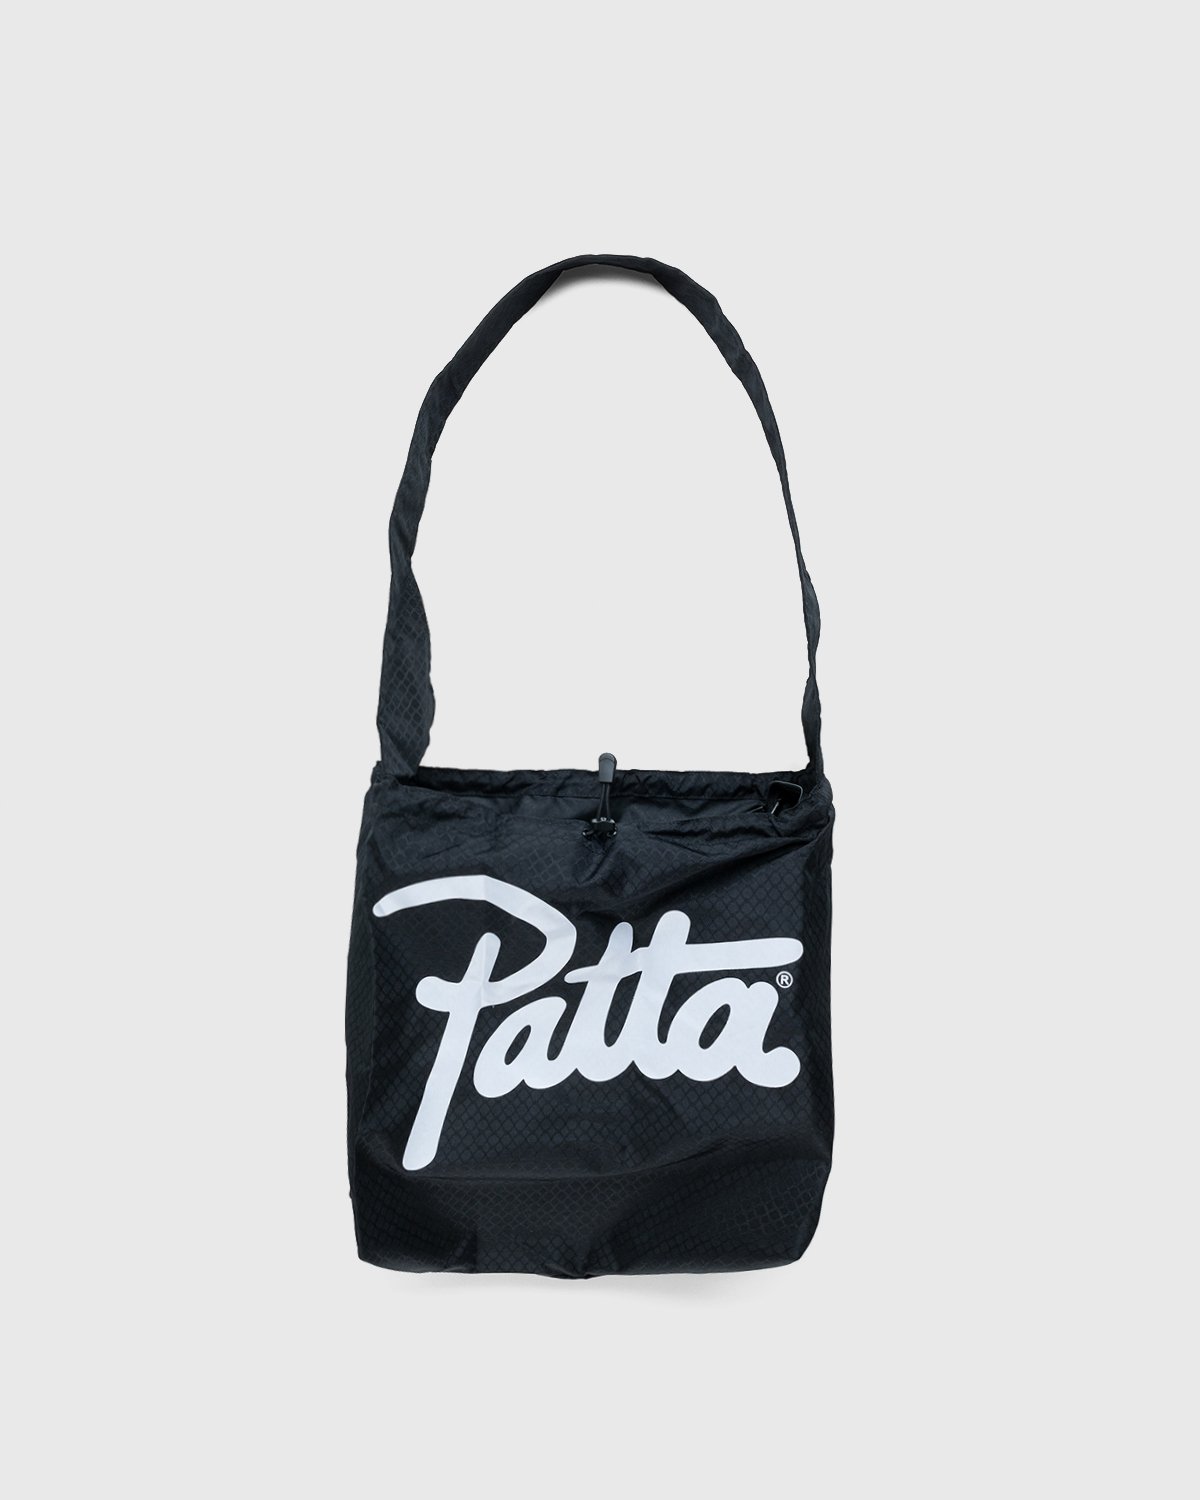 Patta - Diamond Packable Tote Bag Black - Accessories - Black - Image 1